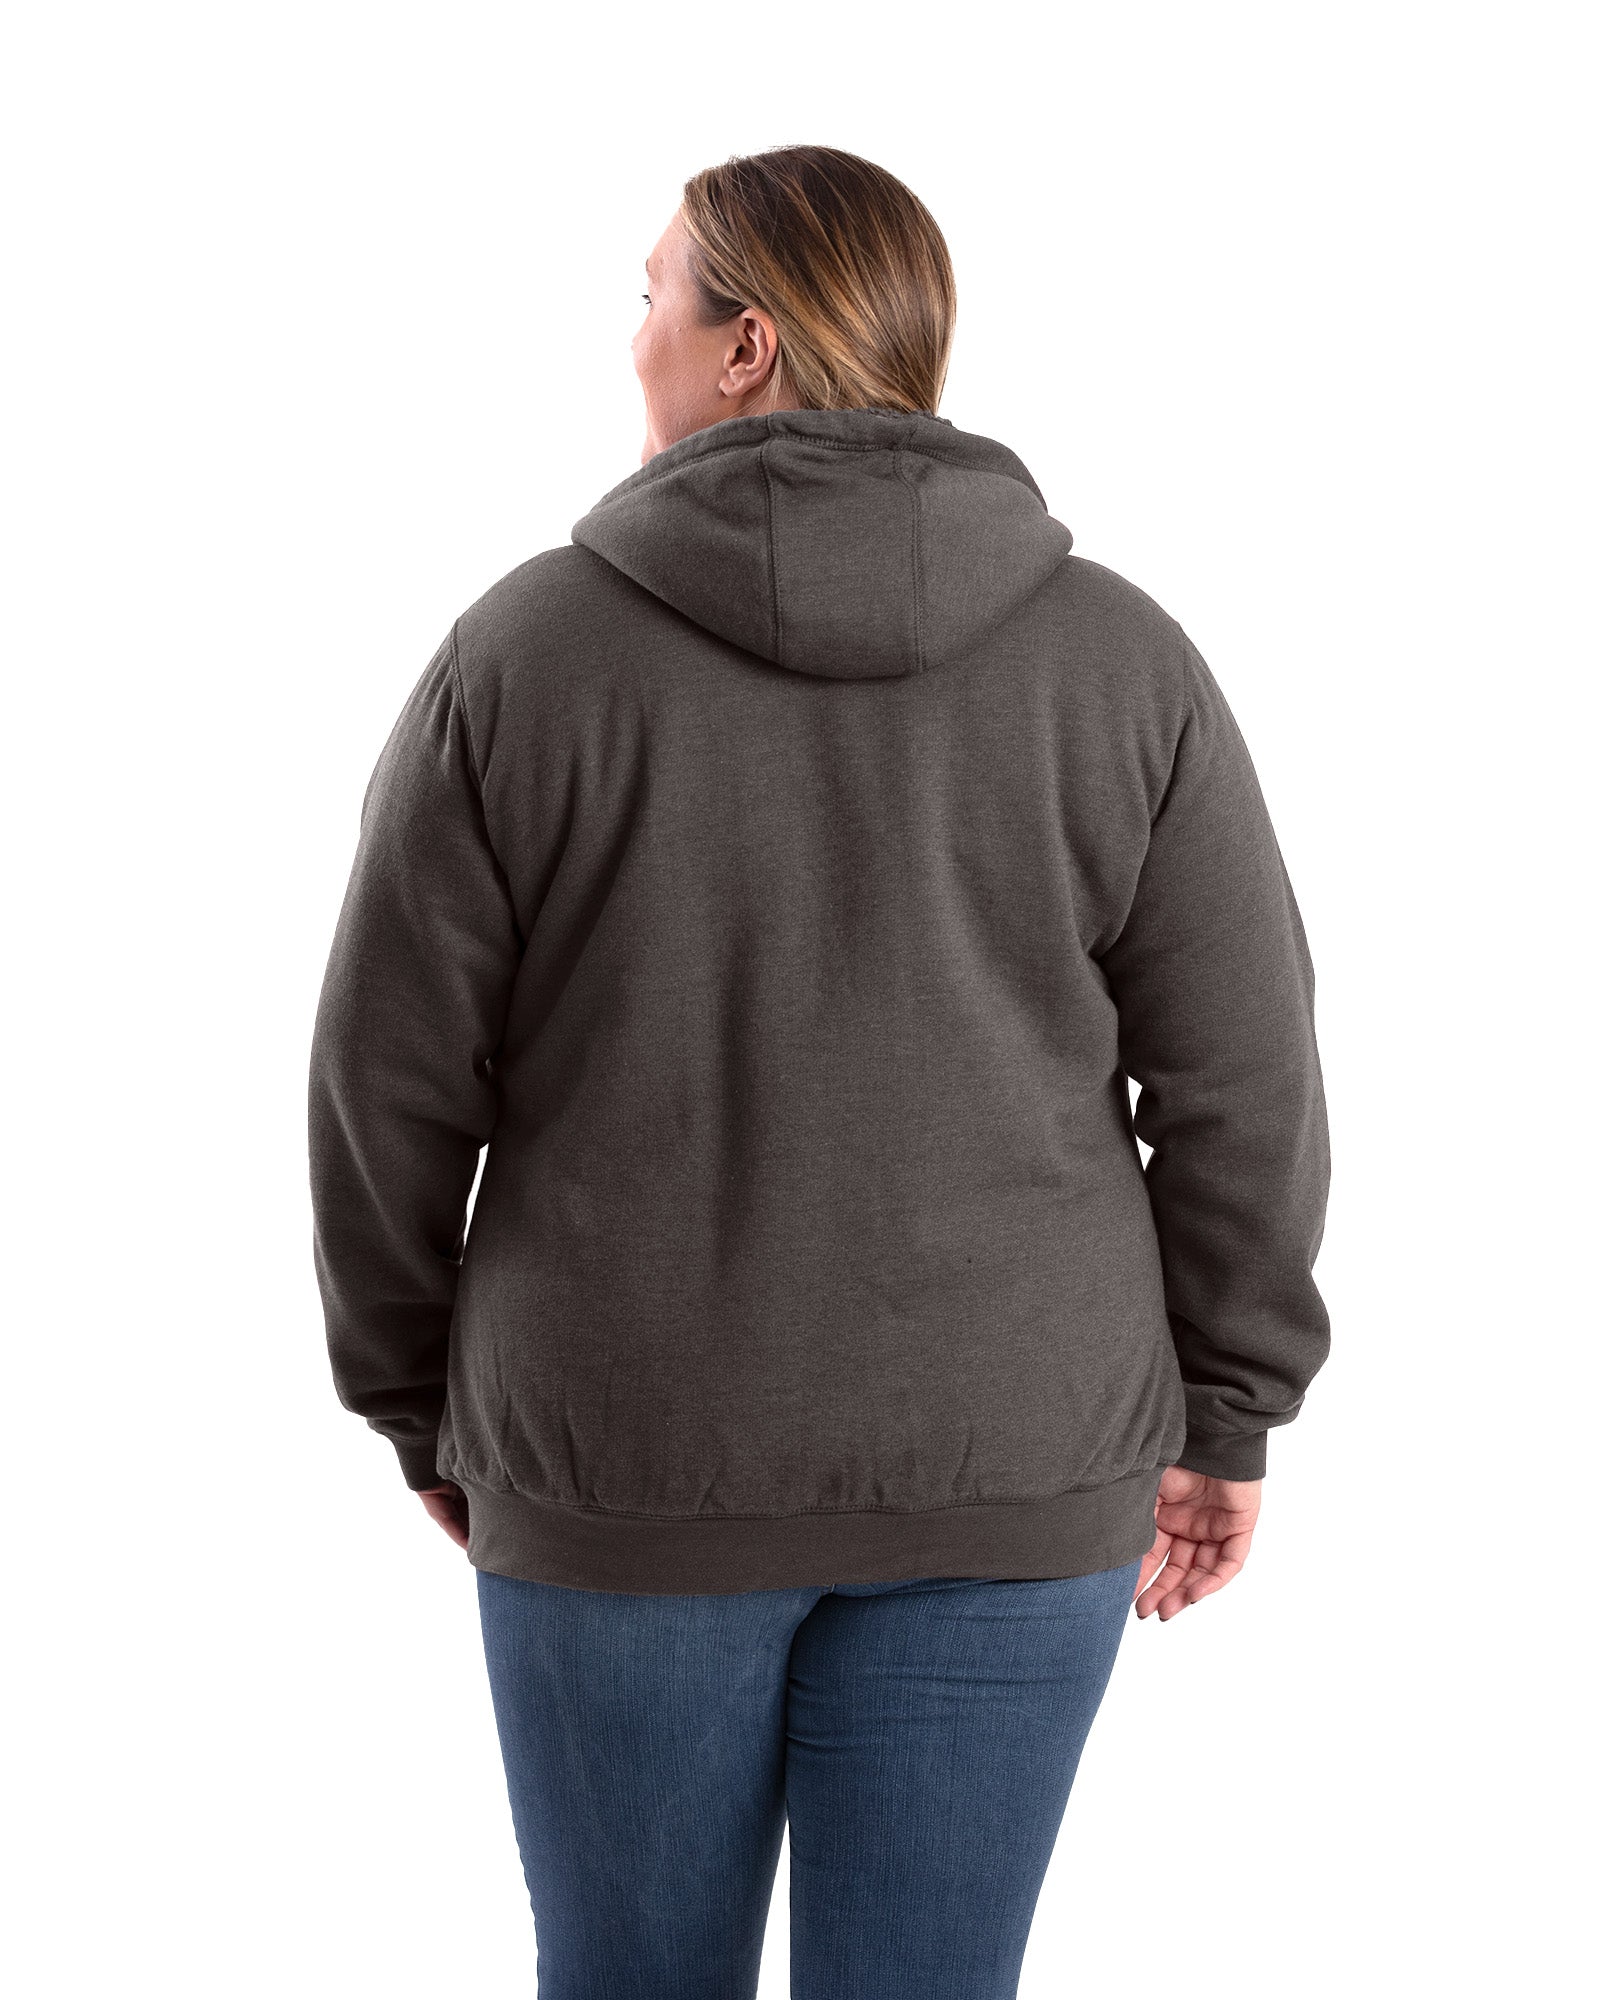  PRDECE Sweatshirt for Women- Solid Thermal Lined